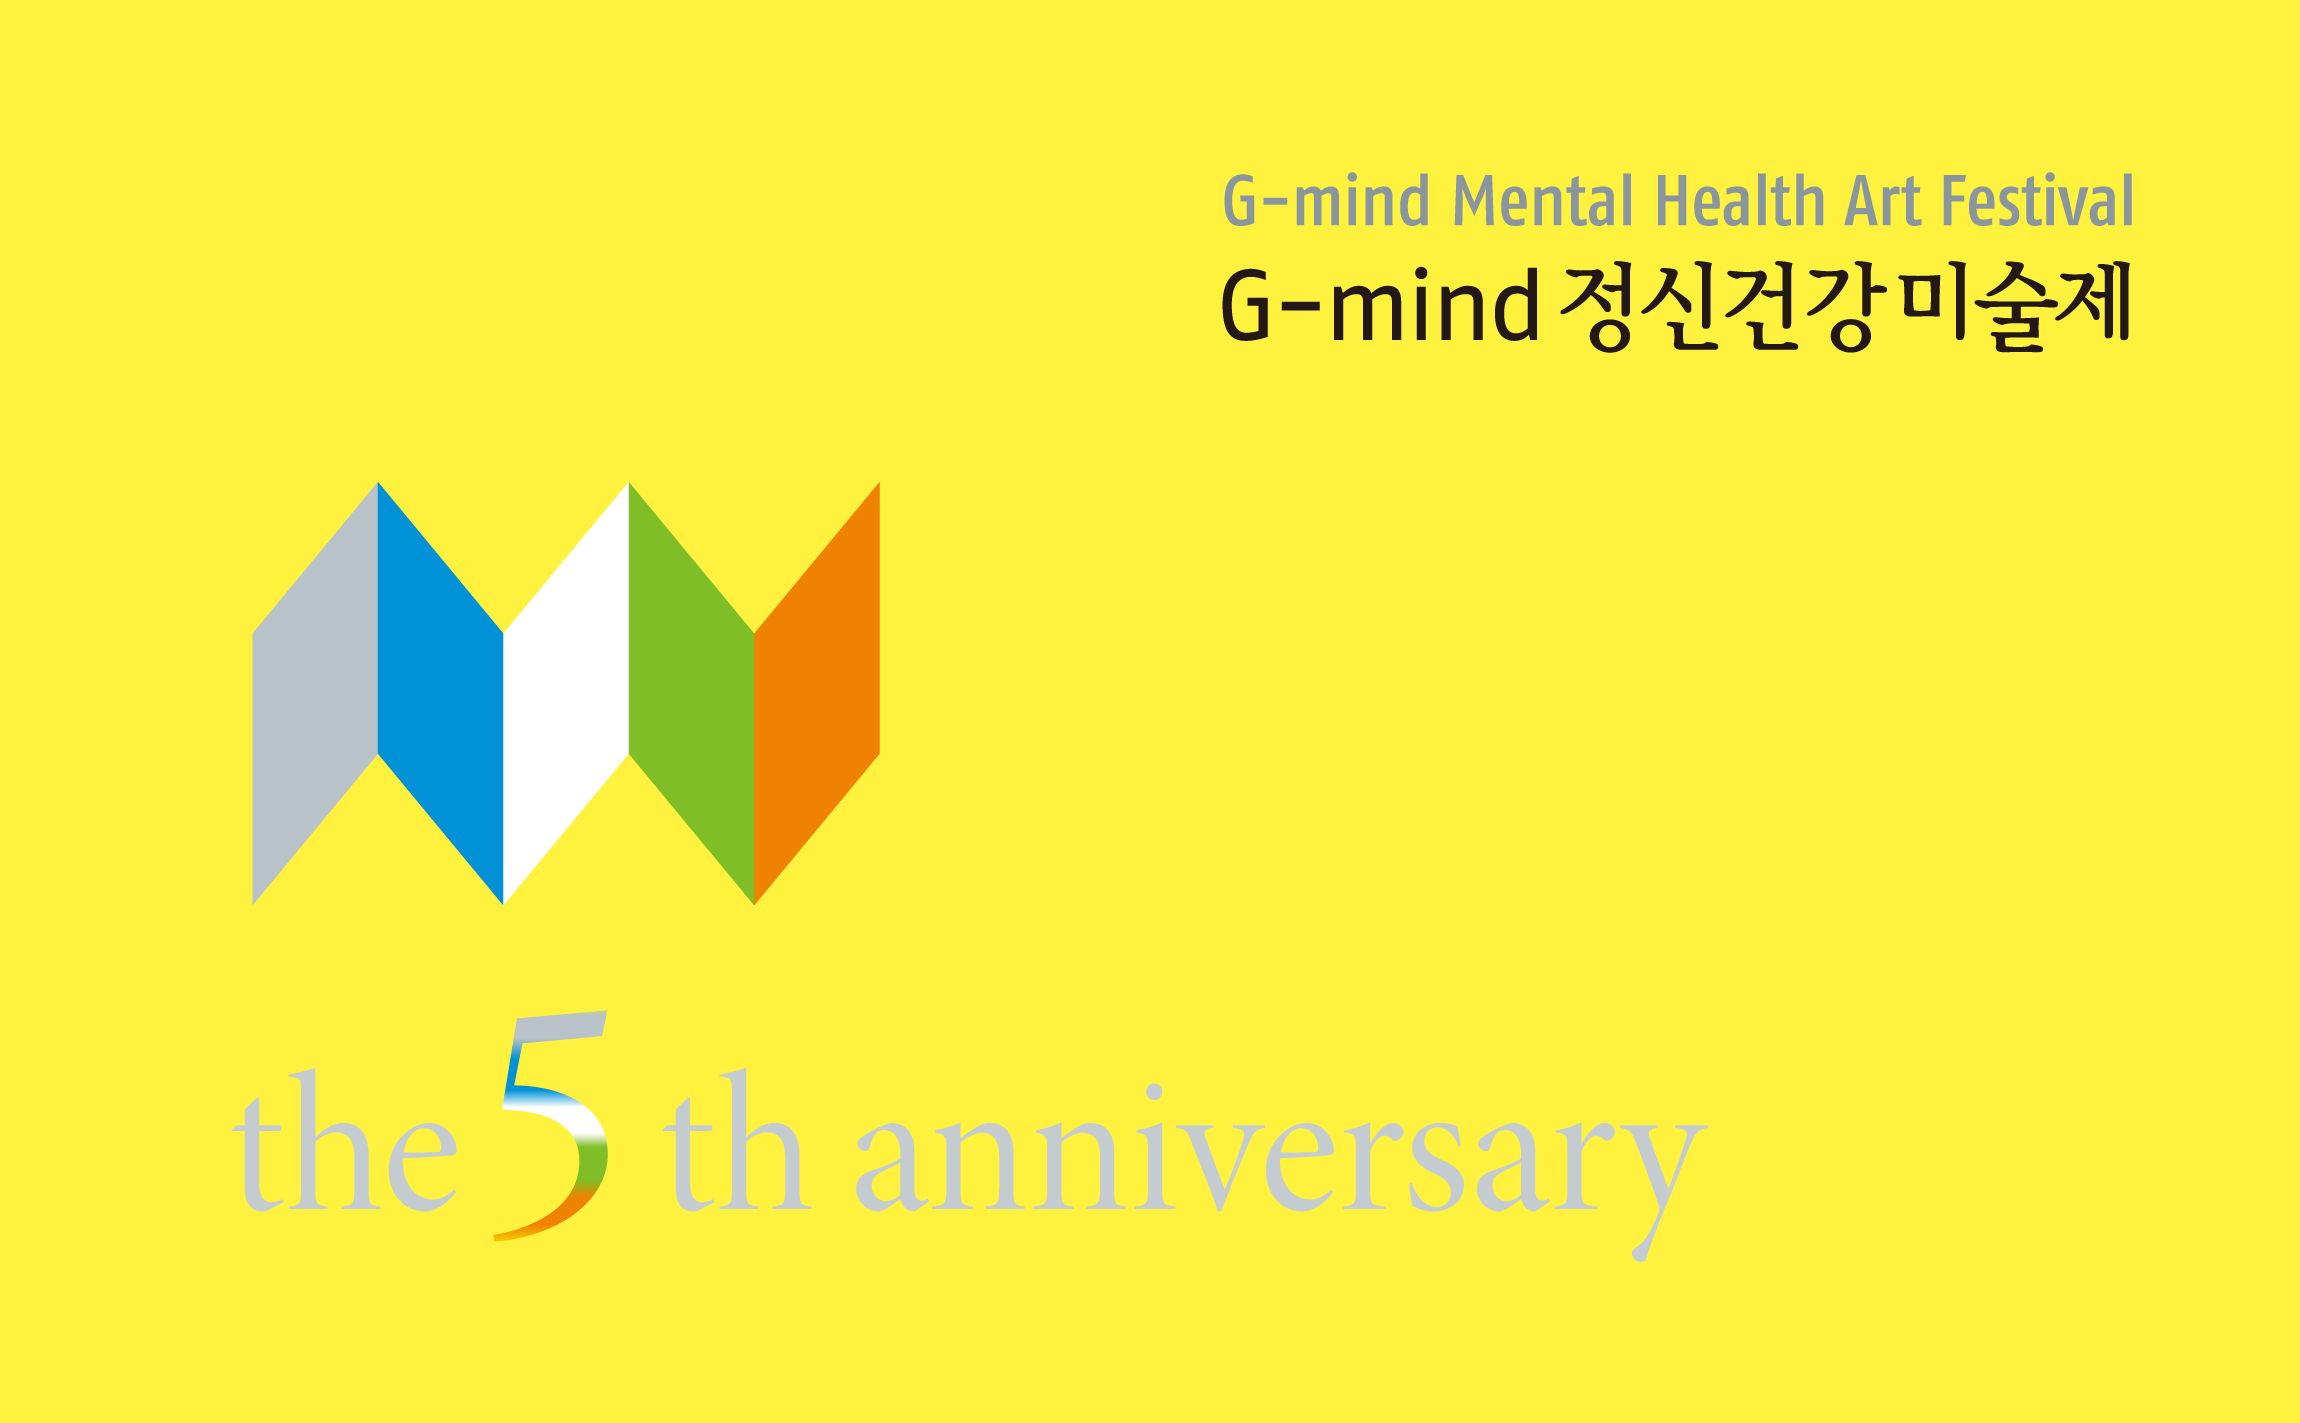 G-mind Art Festival 5th Anniversary Gyeonggi Province Center Editorial